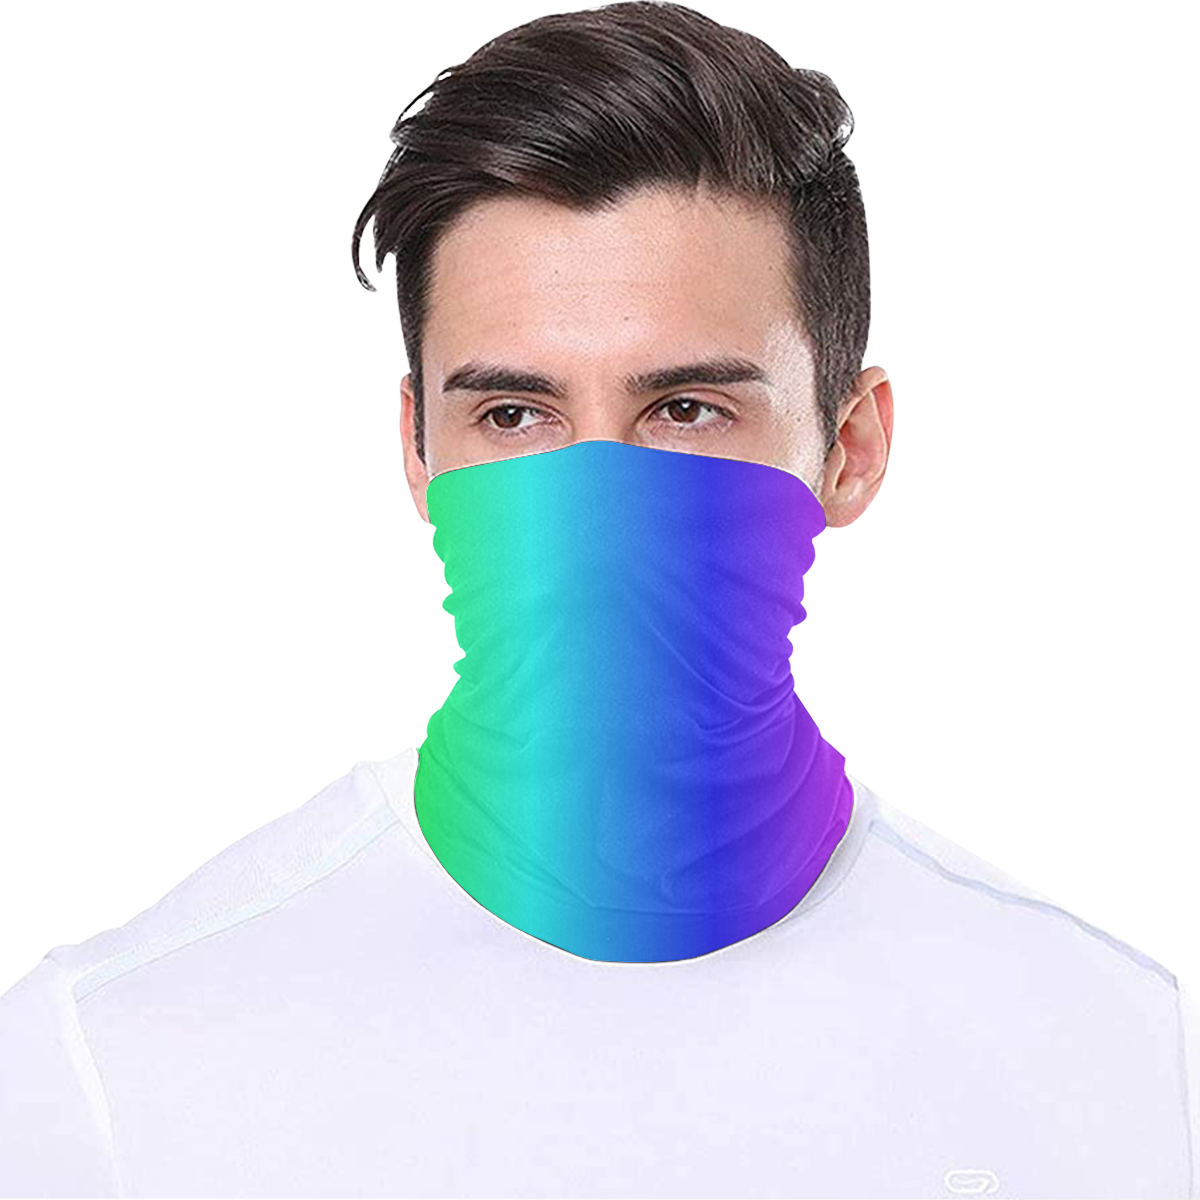 Crayon Box Ombre Rainbow Multifunctional Headwear